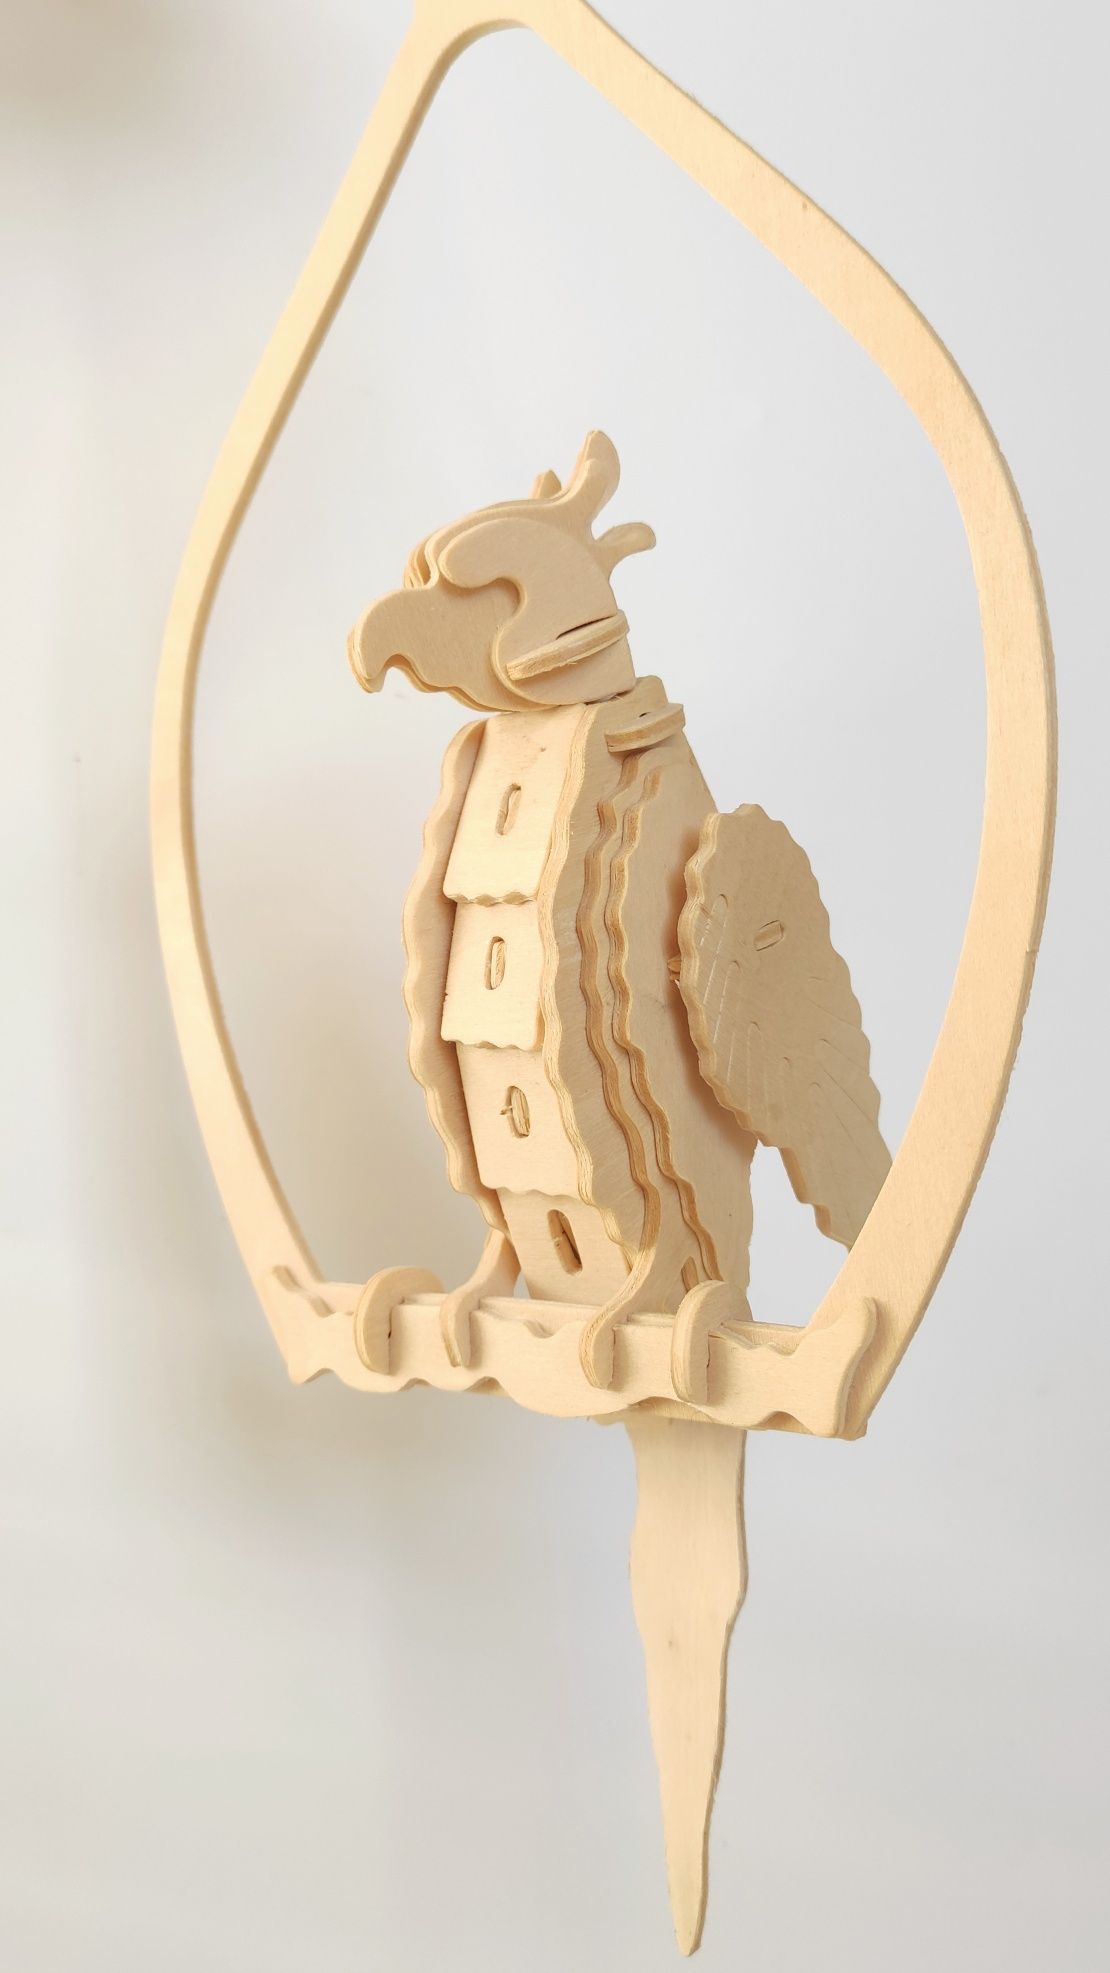 Drewniane puzzle 3D papuga drewniana zabawka